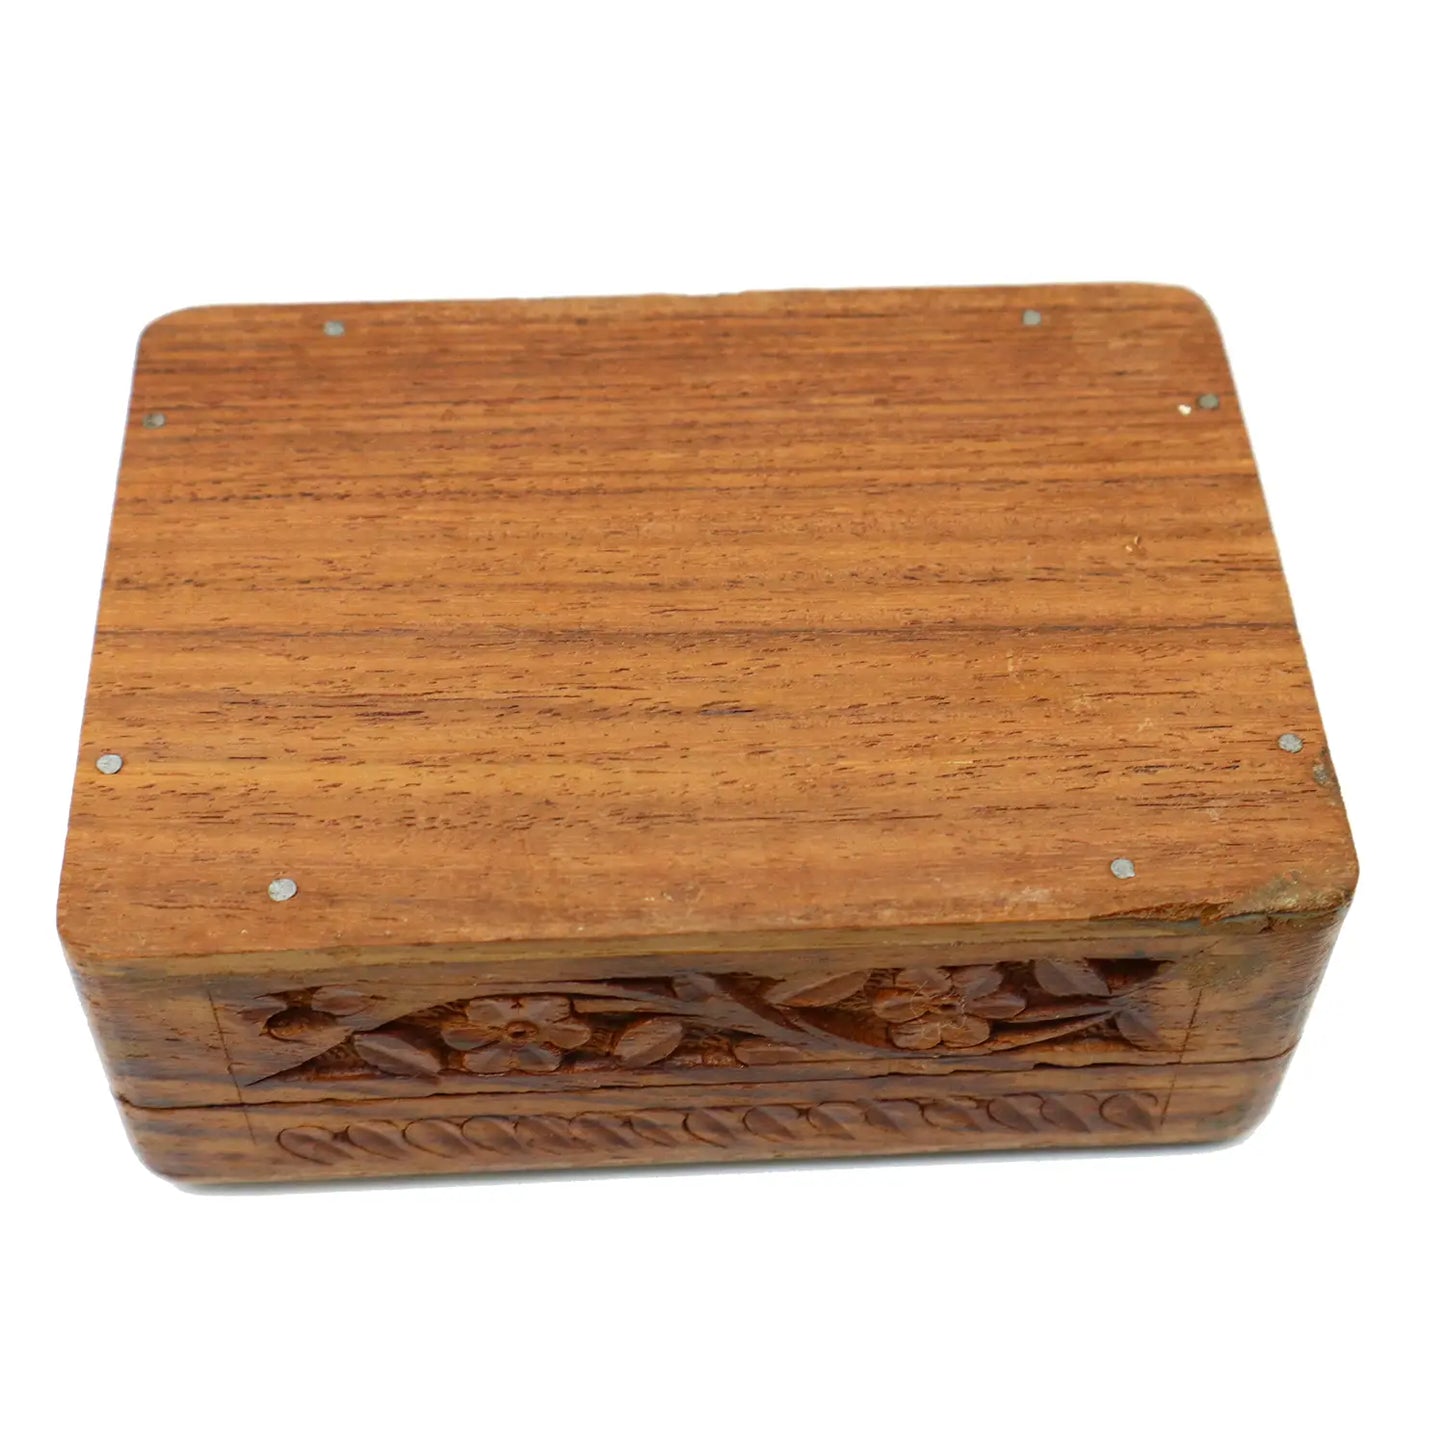 Bottom Base Profile - Antique Primitive Handcarved Hardwood Jewelry Box w/ Carved Floral Designs